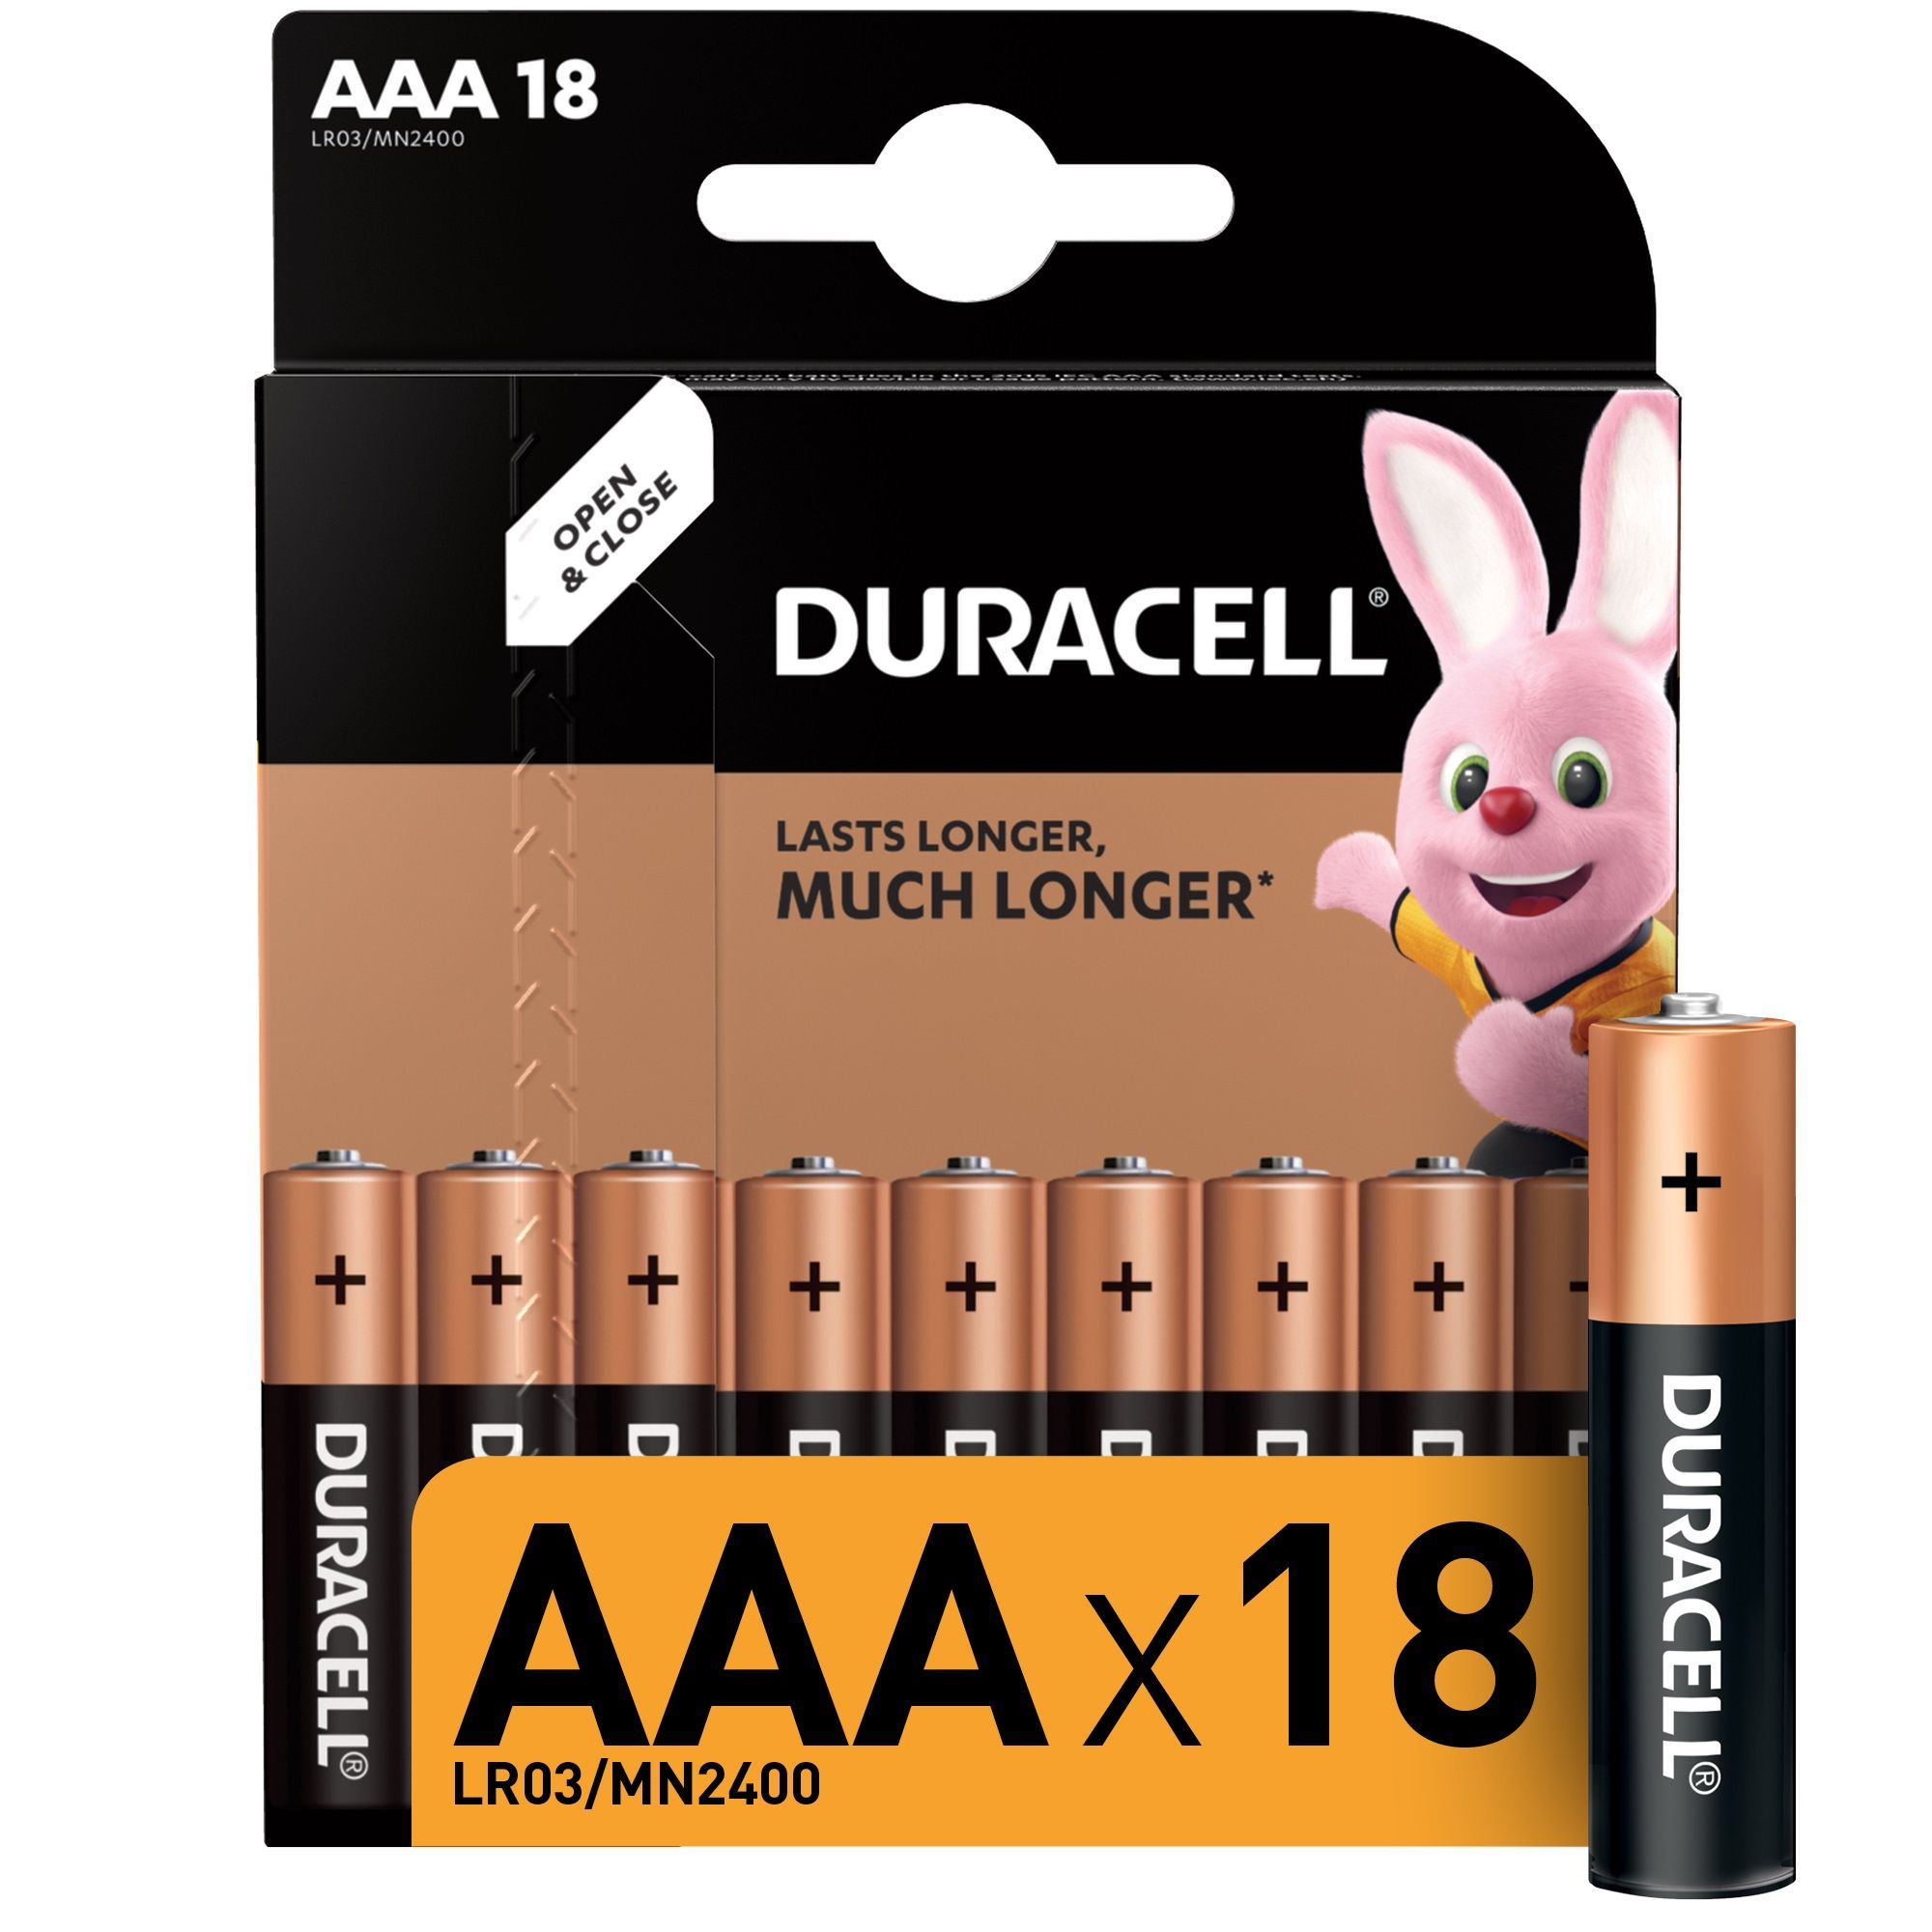  Duracell BASIC AAA LR03  1,5V 18 / 